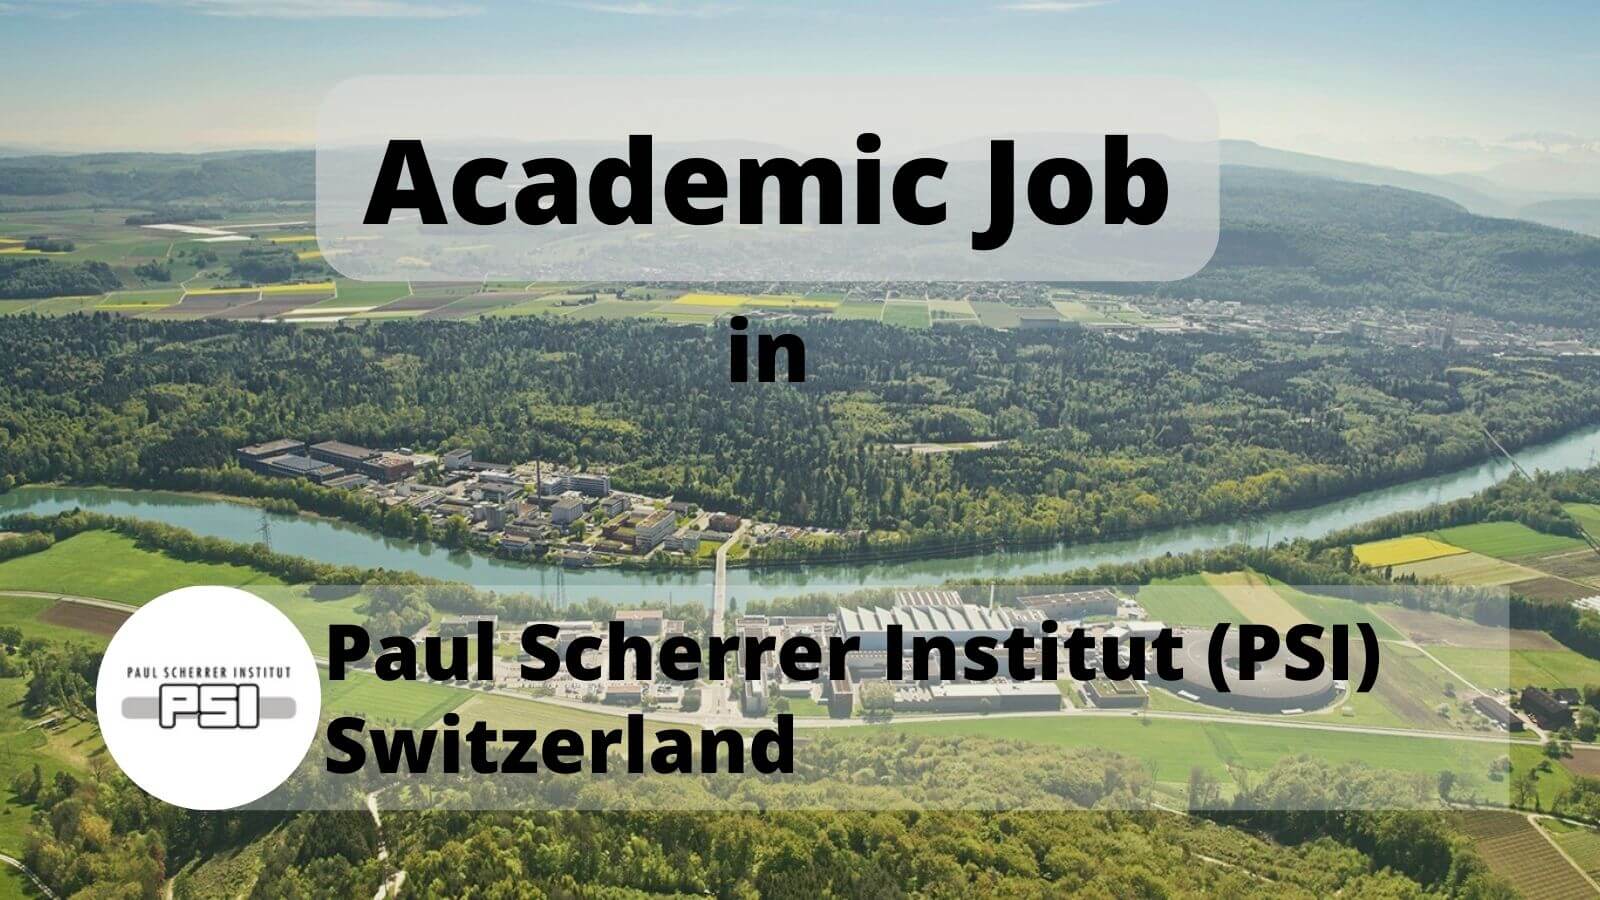 Academic job in PSI Switzerland